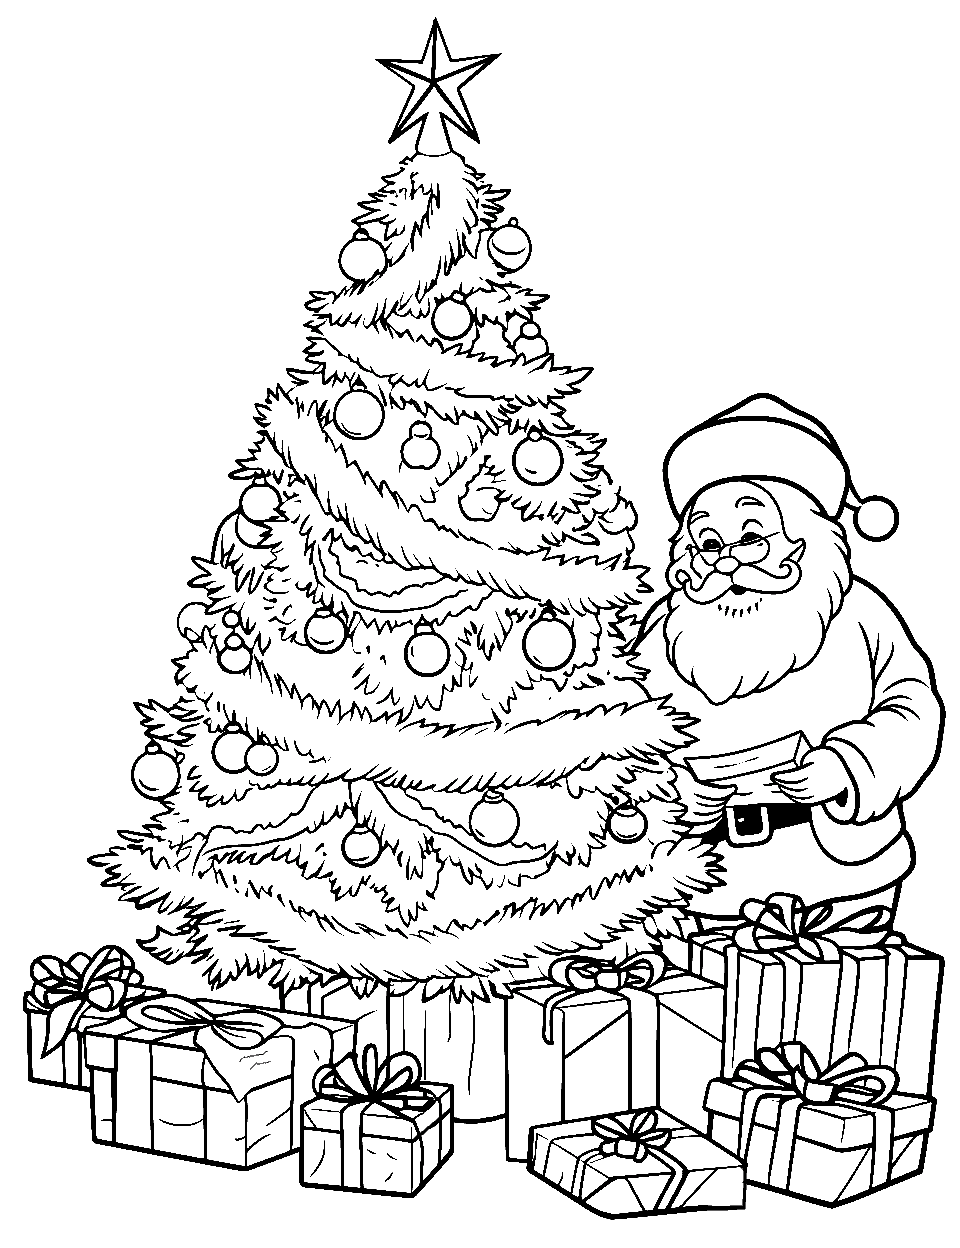 Santa Placing Presents Coloring Page - Santa quietly placing presents under a beautifully decorated Christmas tree.